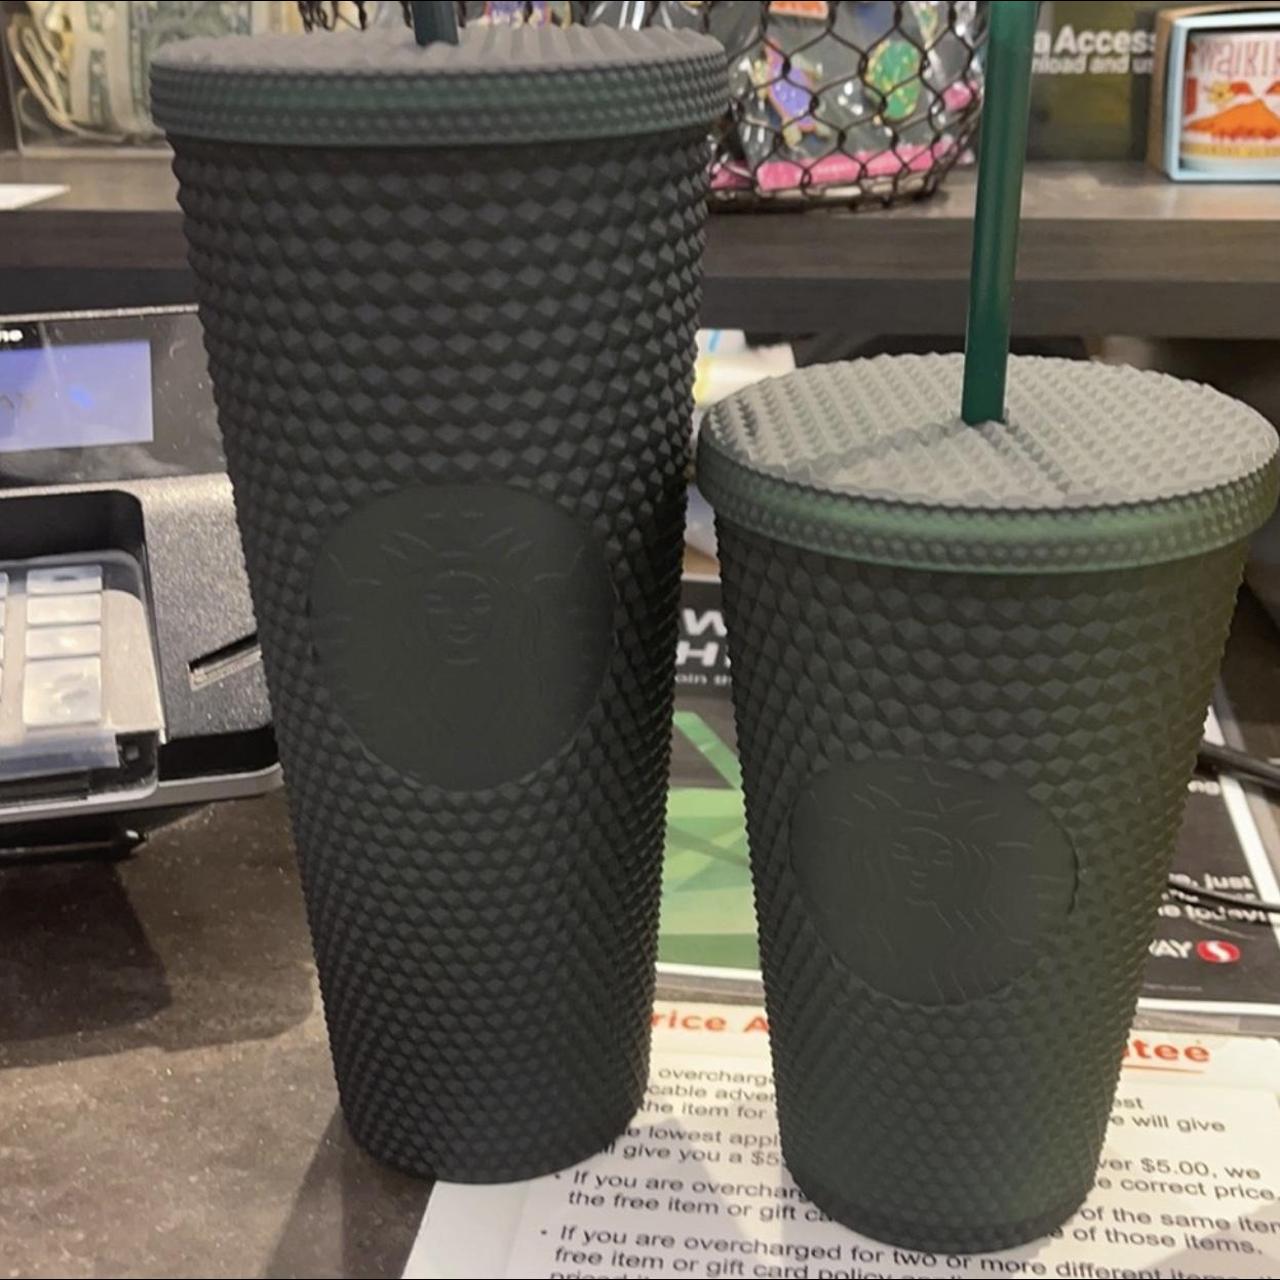 NEW 2022 Starbucks Matte Dark Green Venti Studded Tumbler